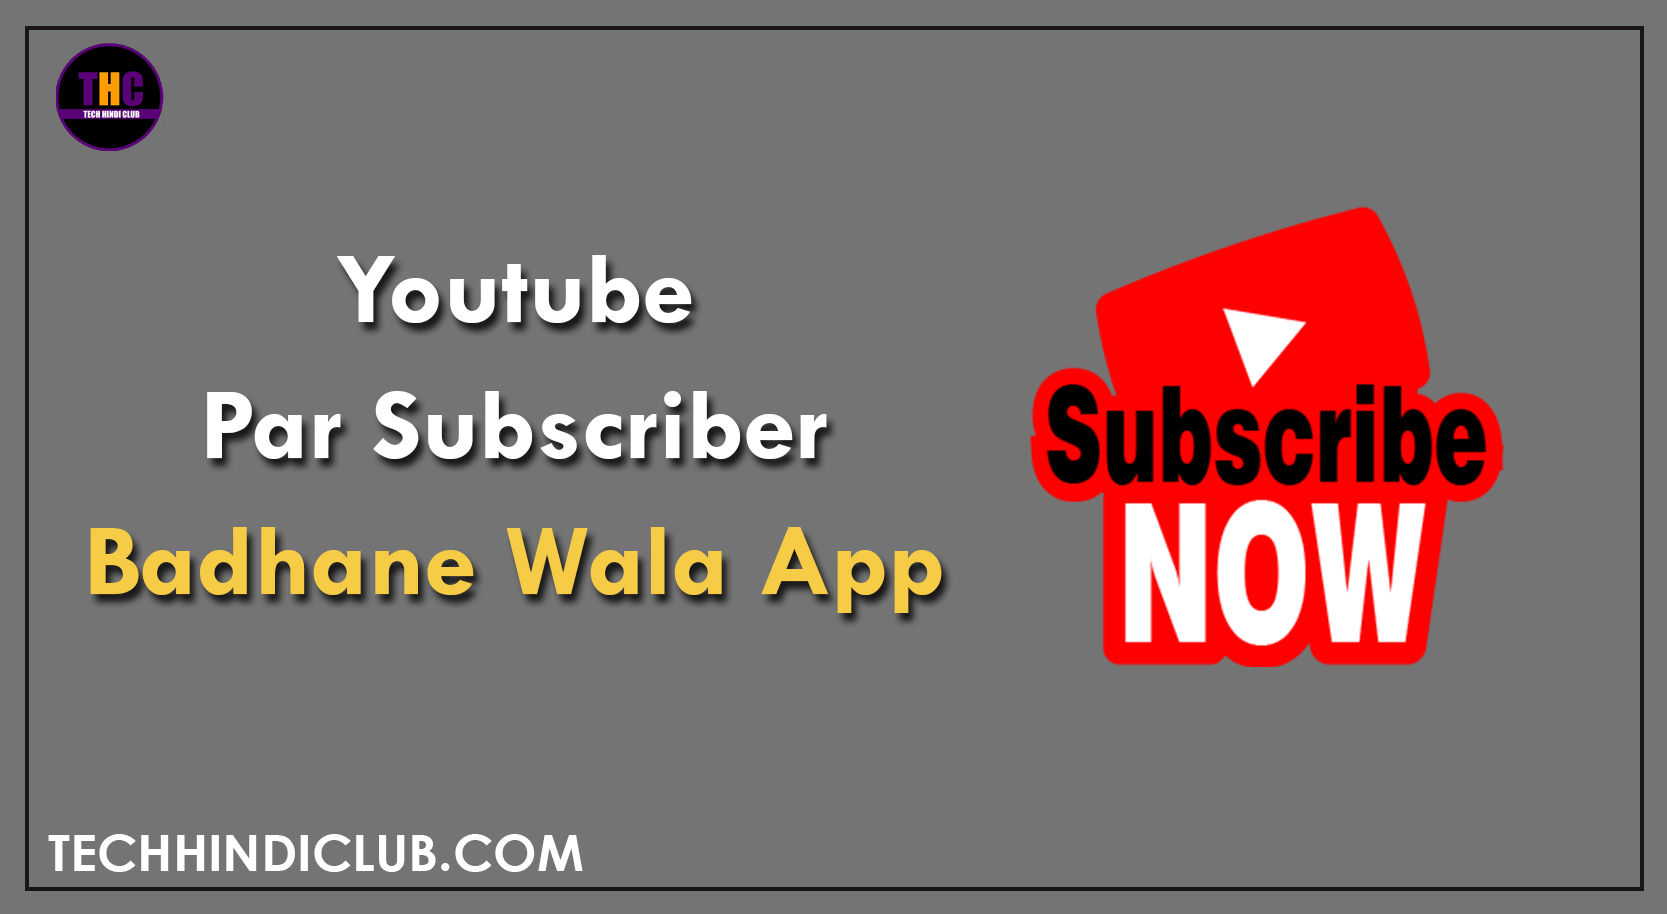 Youtube Par Subscriber Badhane Wala App